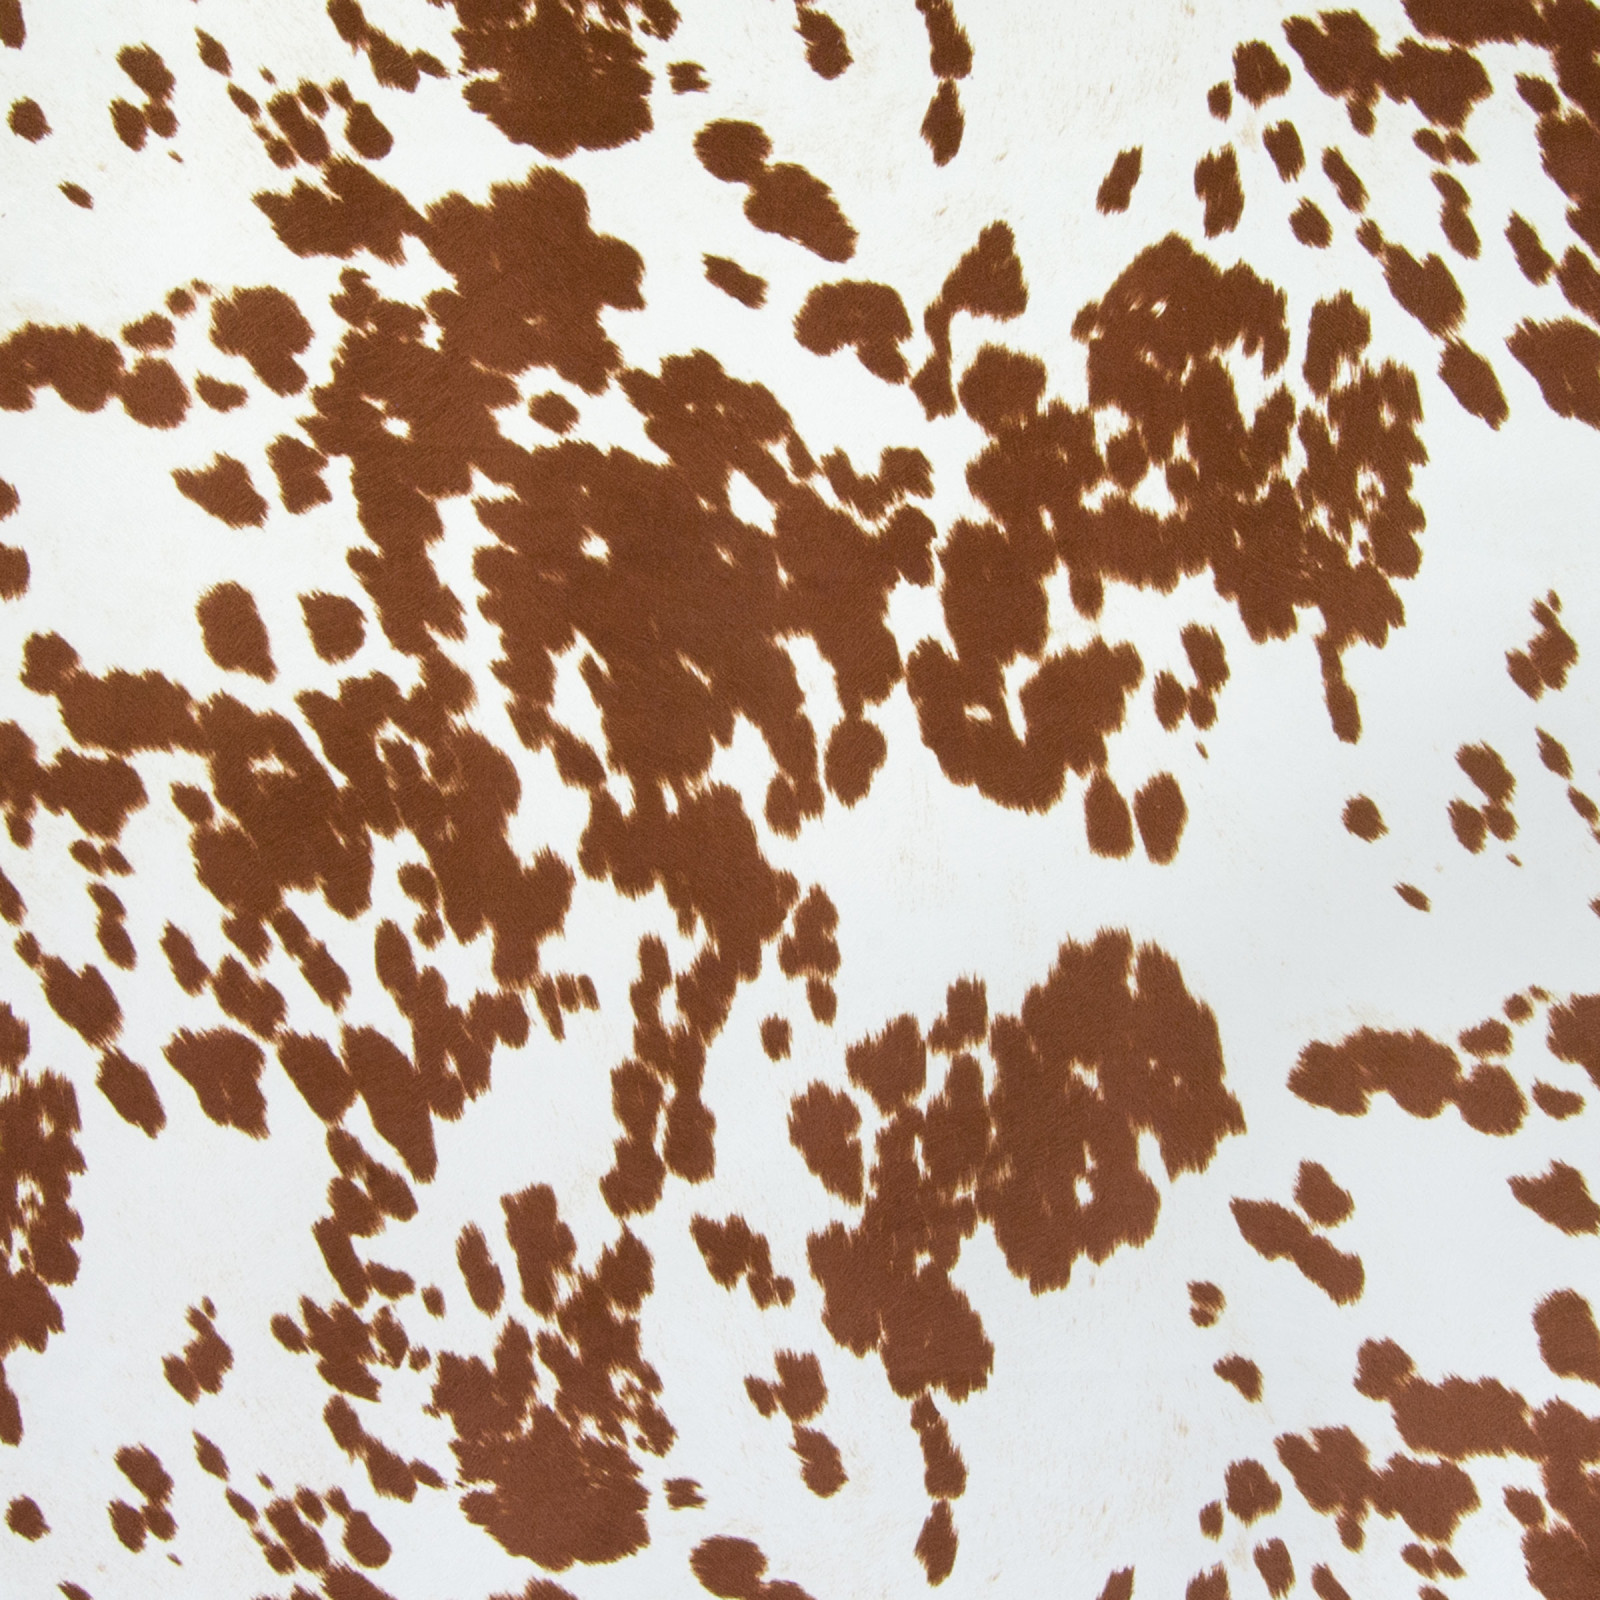 Brown Cow Skin pattern